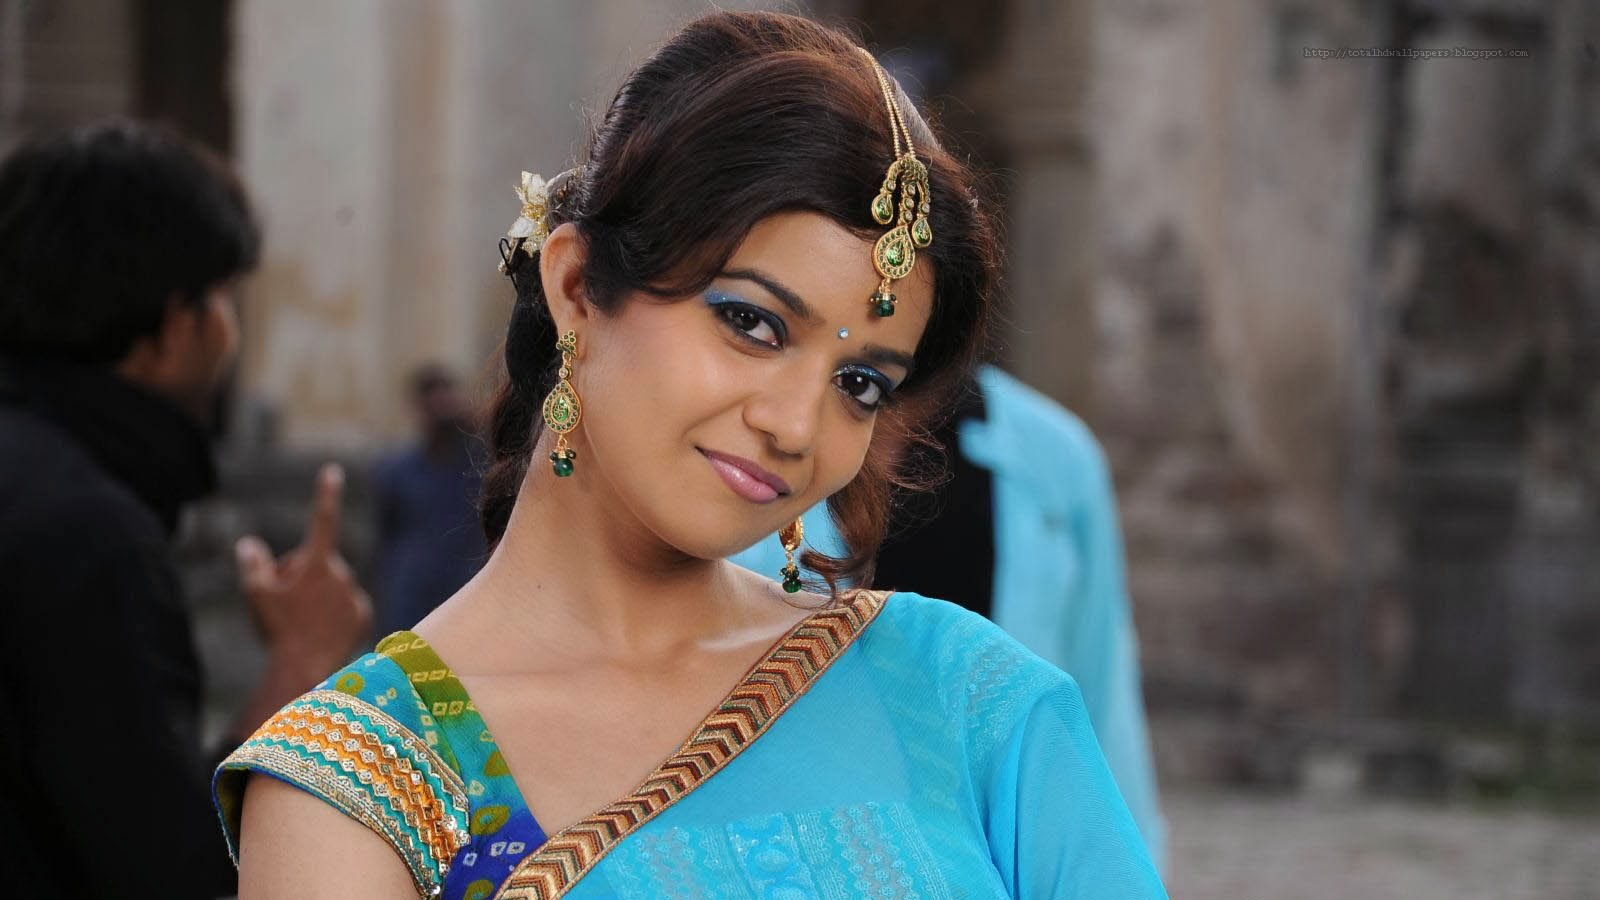 Bollywood hd wallpapers 1080p: Tollywood Actress HD Wallpapers